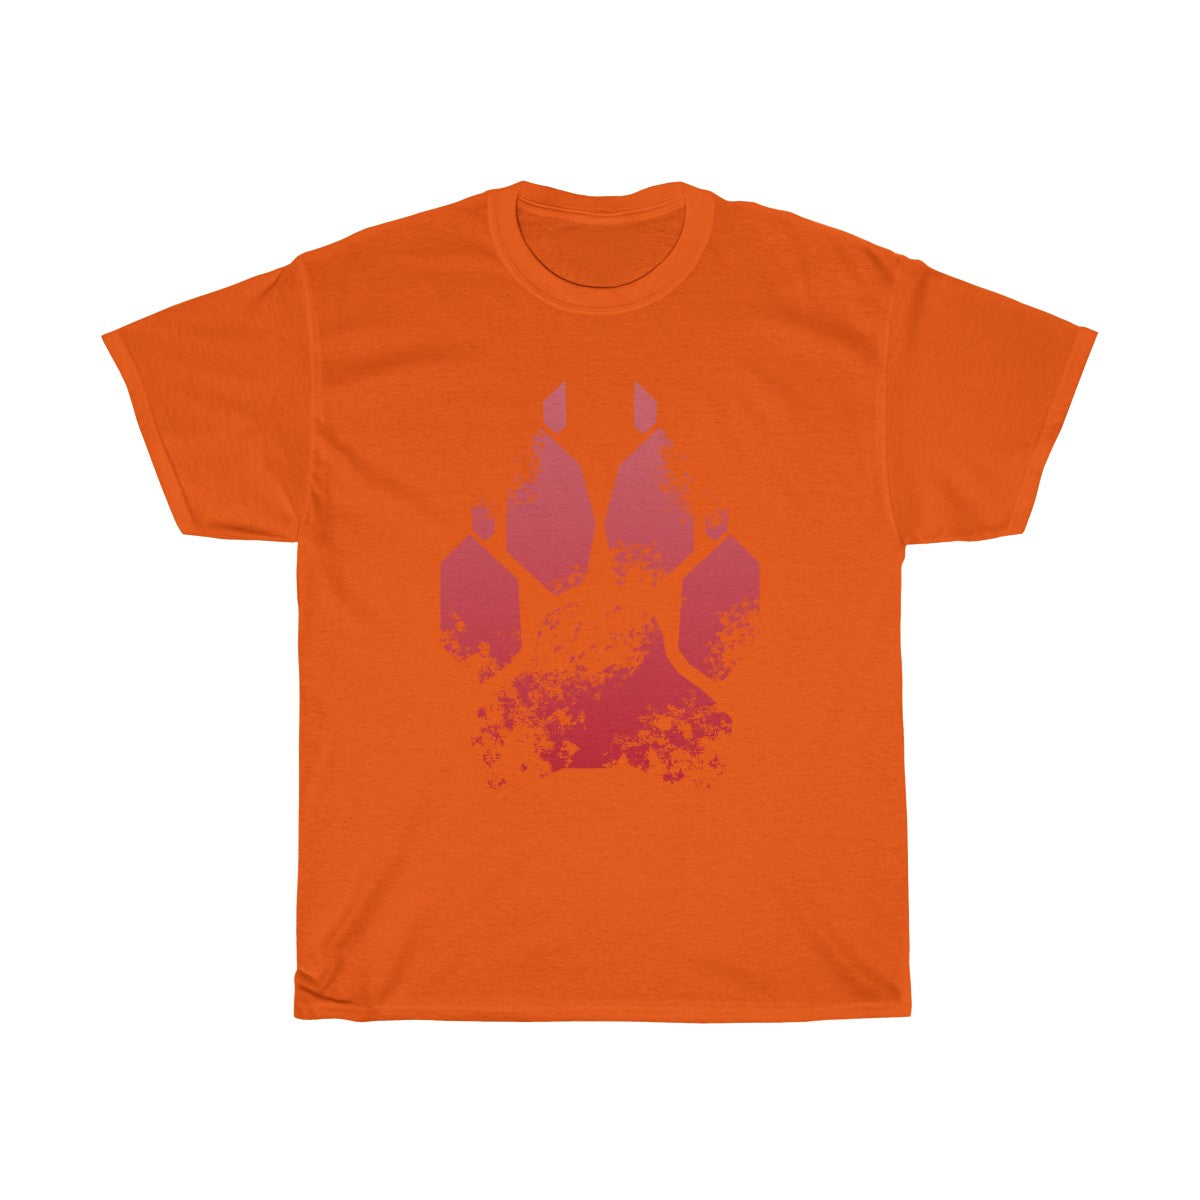 Splash Red Canine - T-Shirt T-Shirt Wexon Orange S 